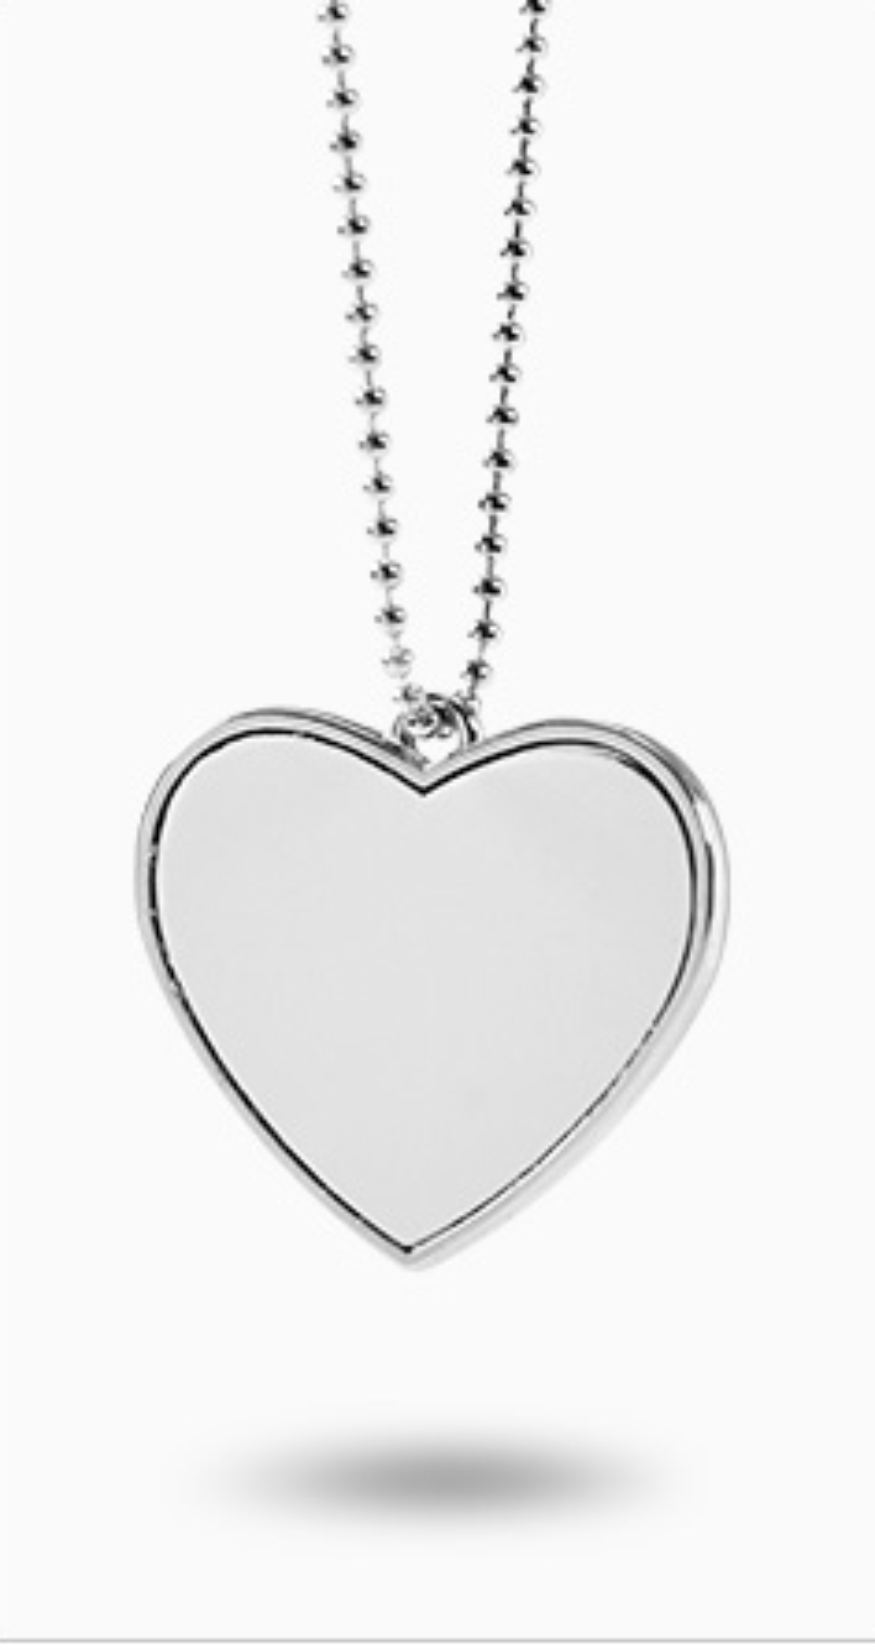 Heart Shaped Pendant - Clearance - No Box - Unprinted